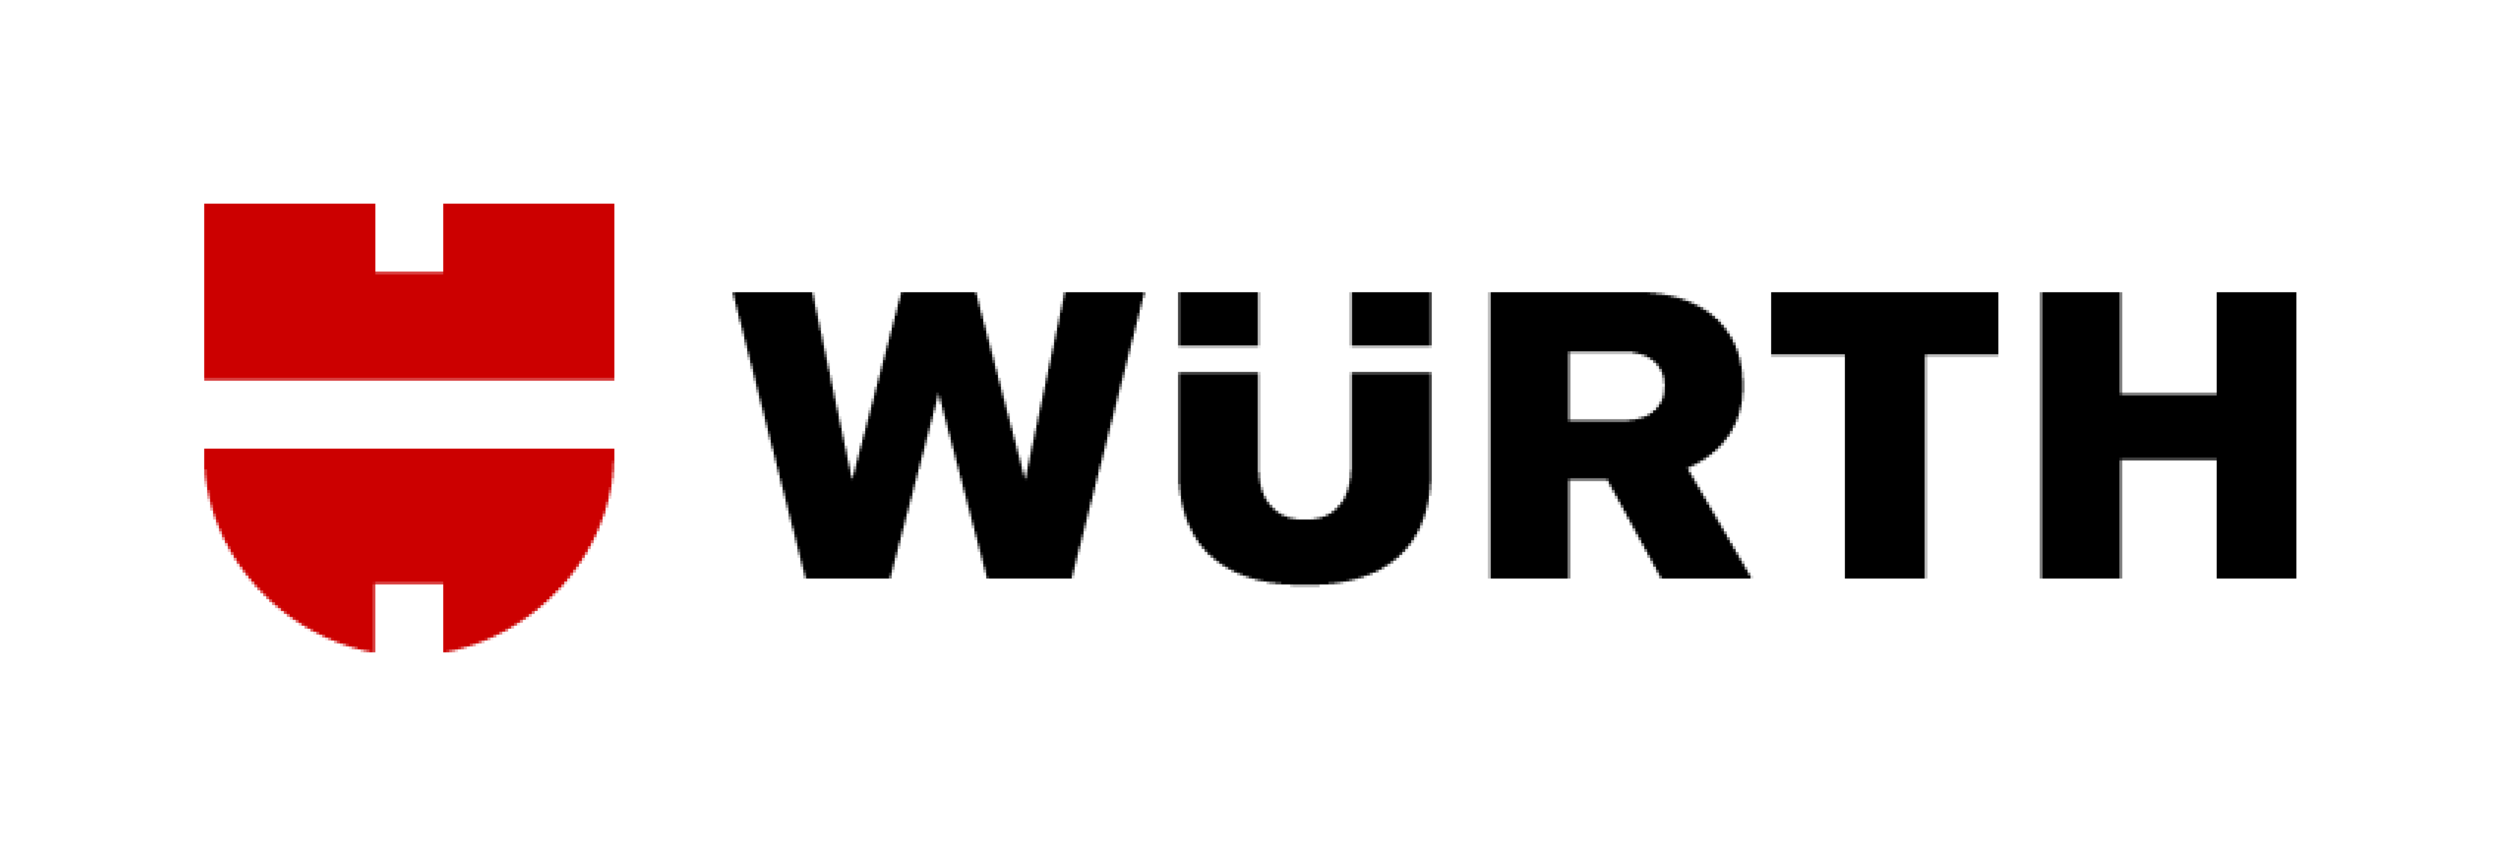 wuerth-logo-trans.png